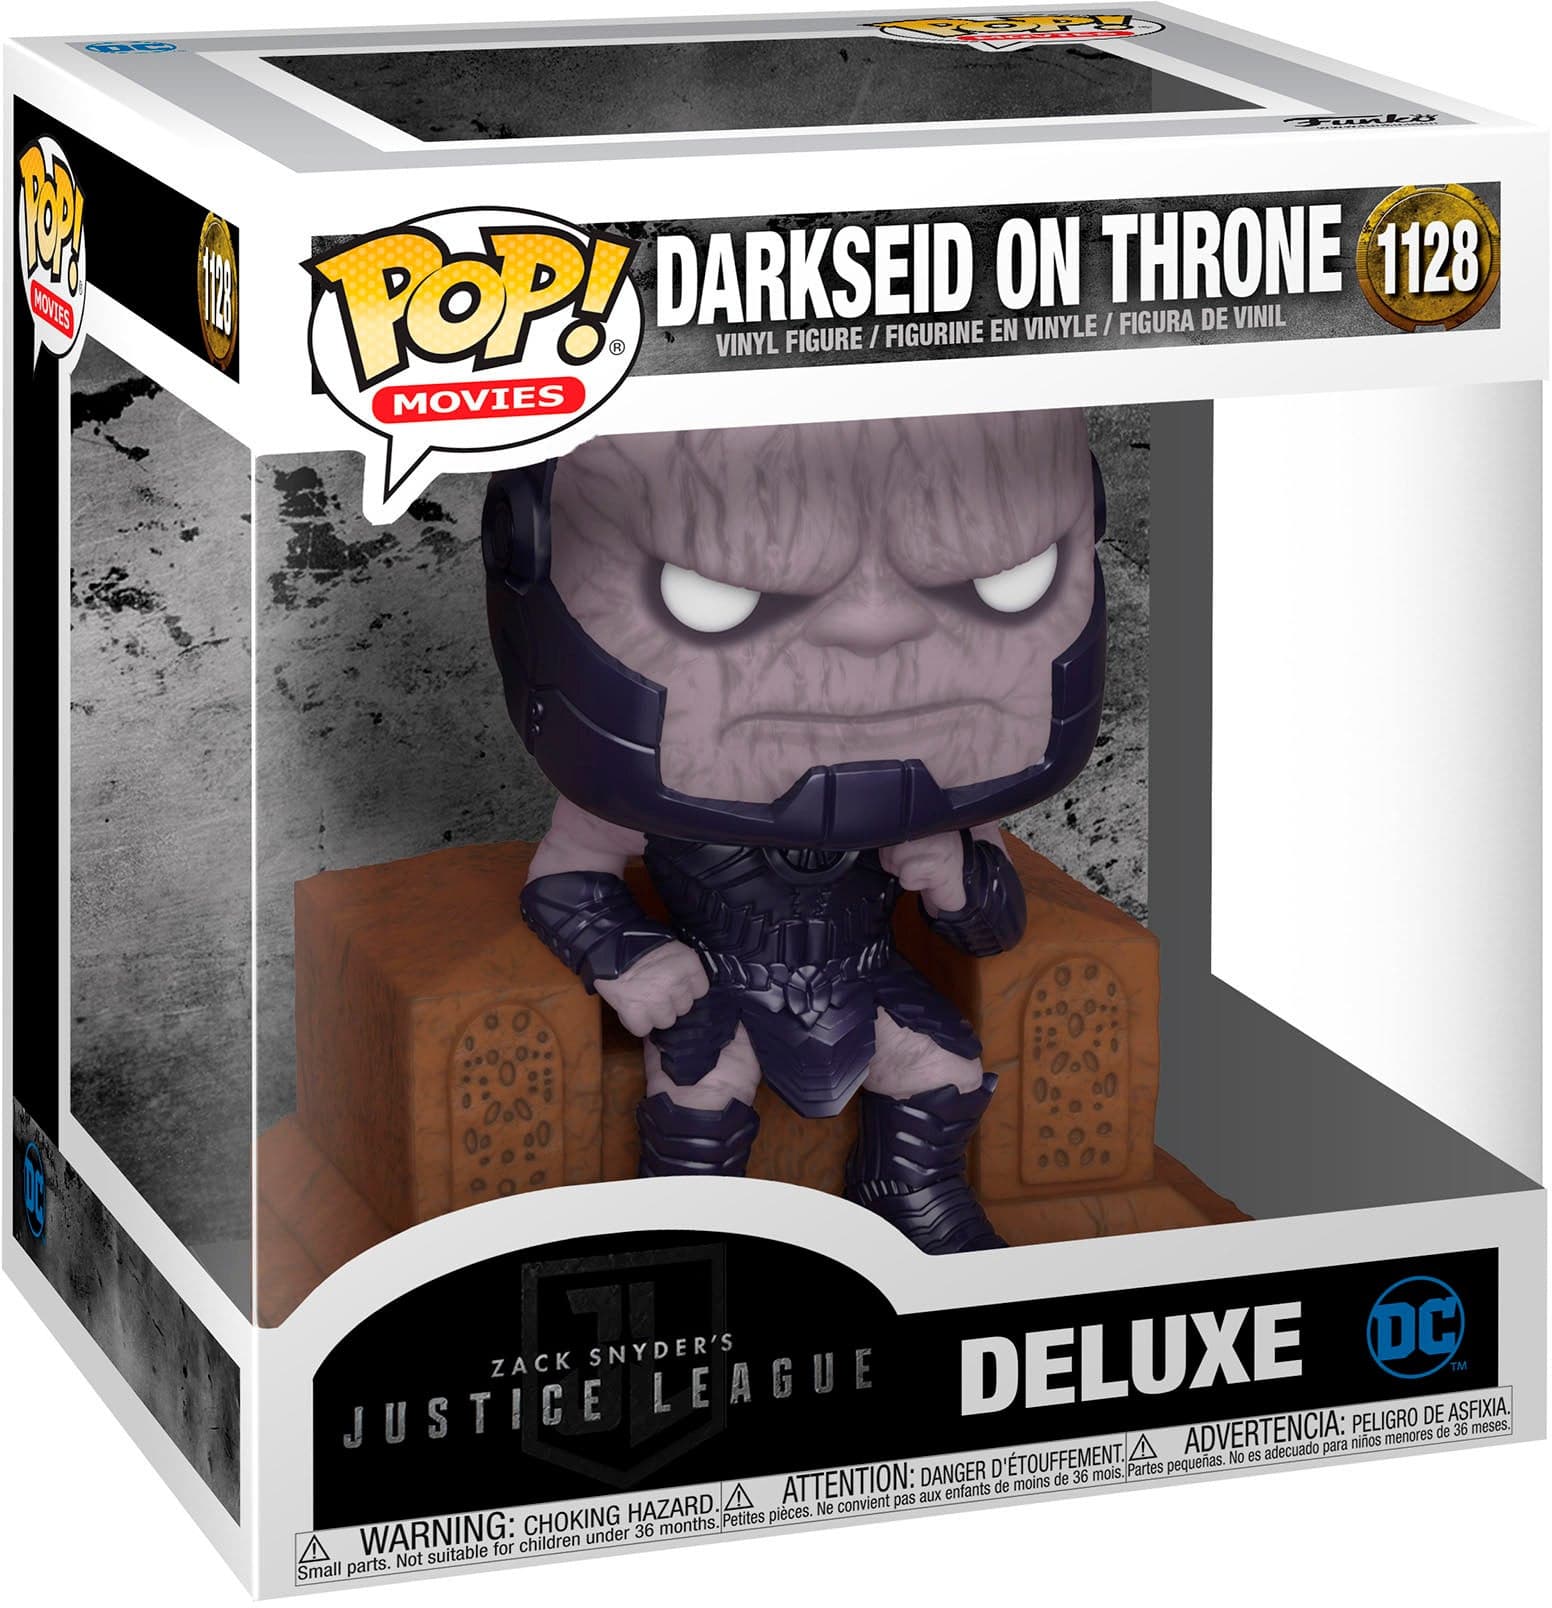 Justice League - POP! Darkseid on Throne.